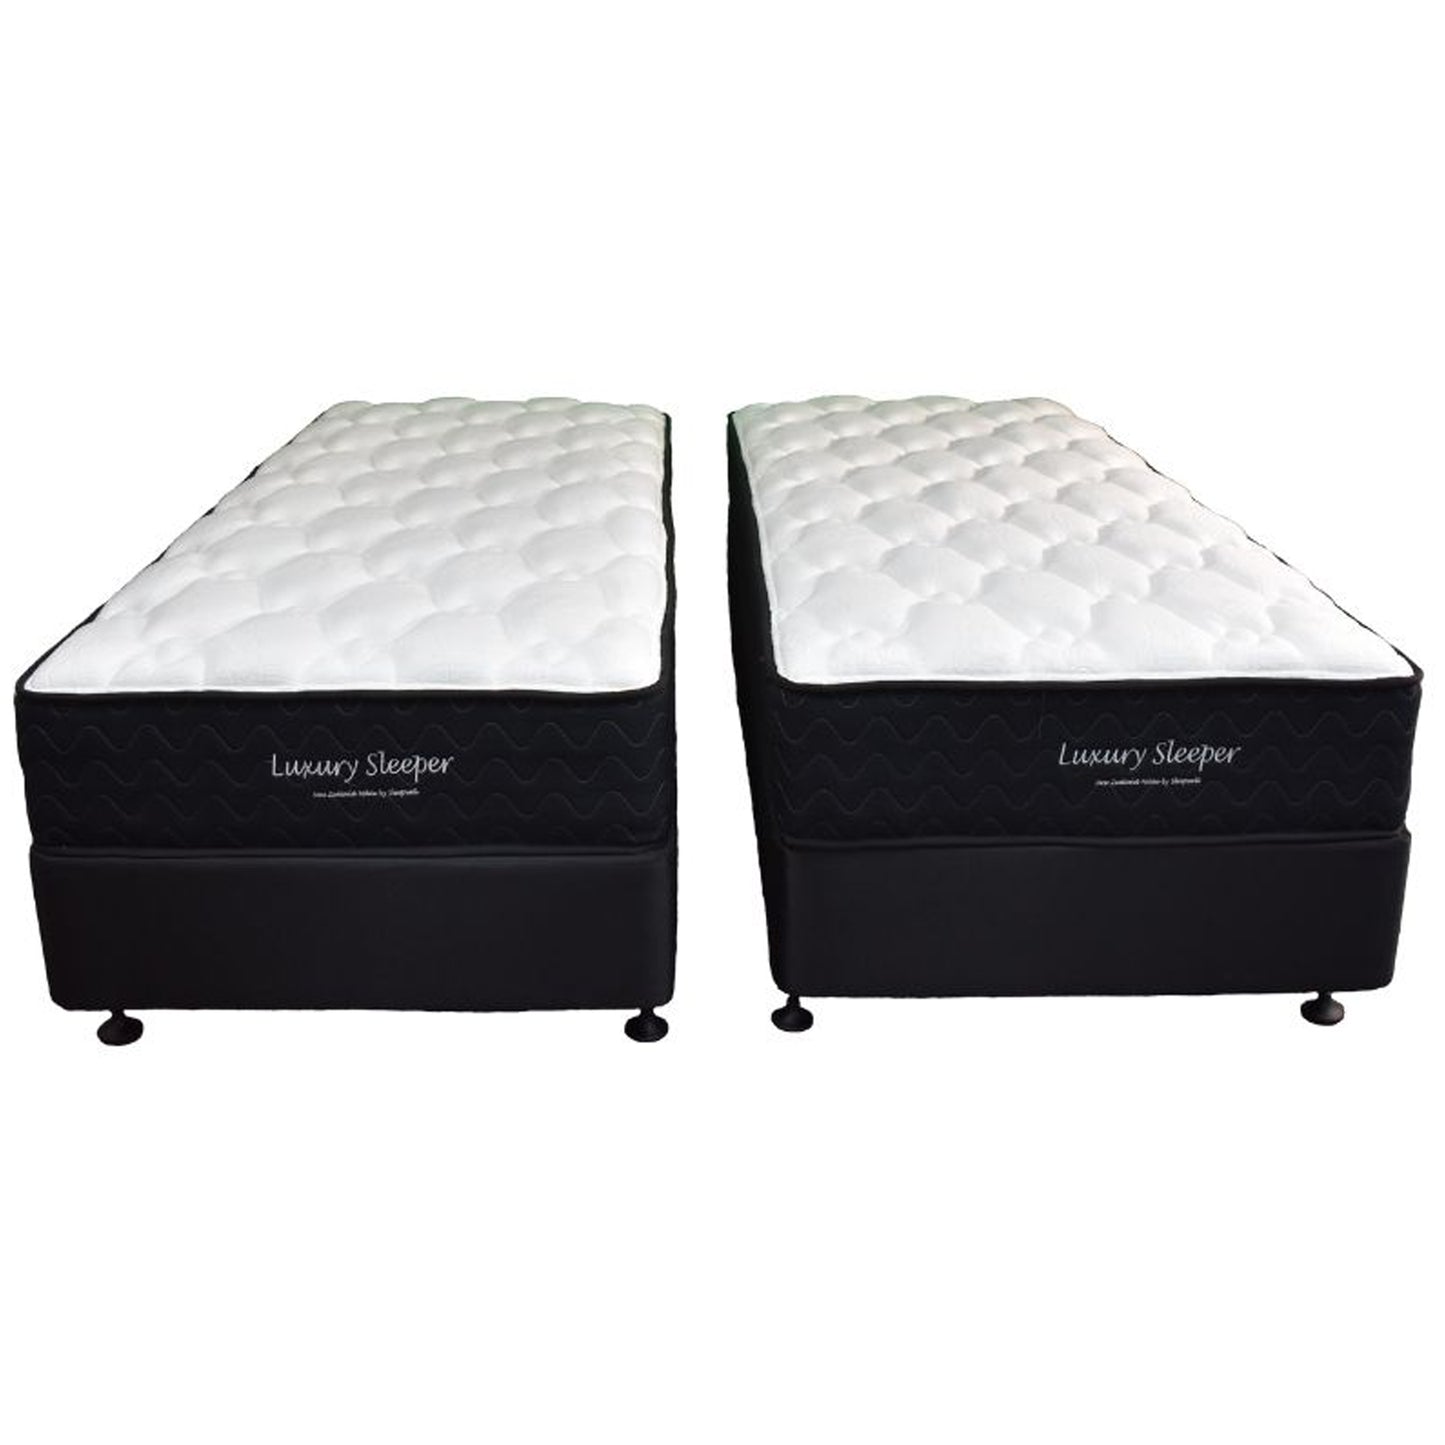 Sleepwell Luxury Sleeper Split Mattress